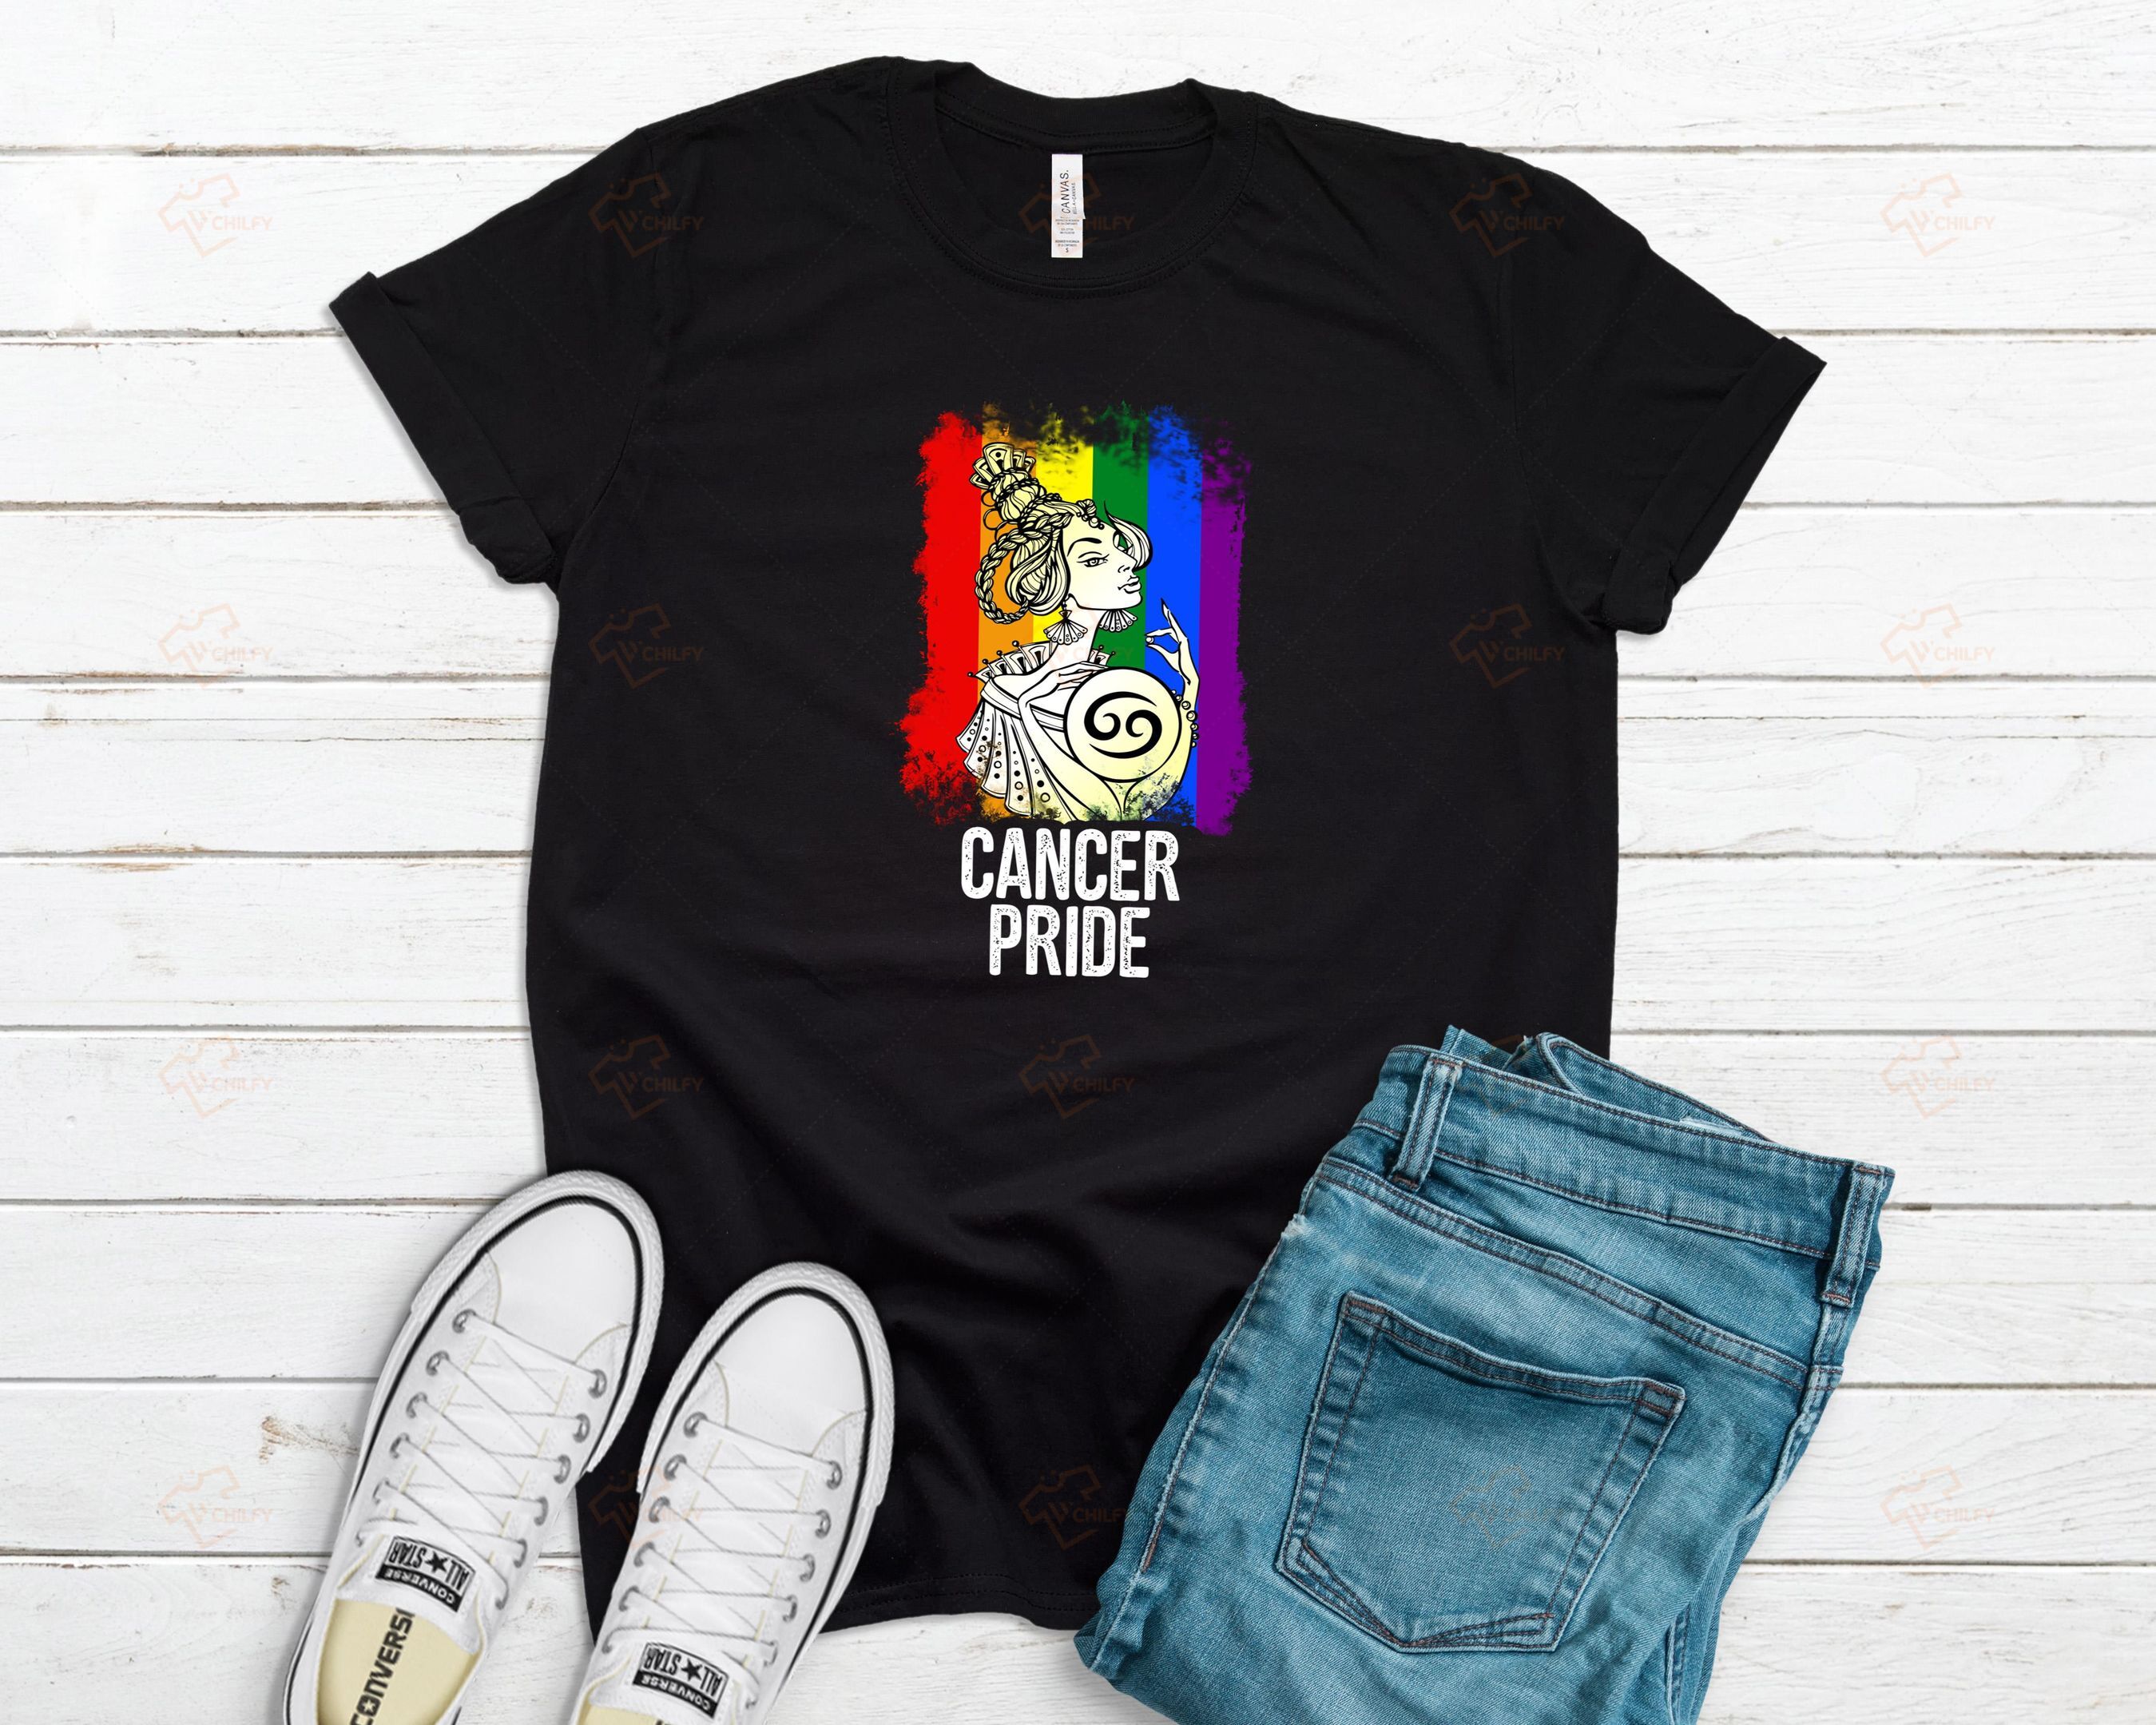 12 Signs Of The Zodiac Cancer Shirt, Lgbt Shirt, Lgbt Pride Shirt, Lgbt Queer, Lgbt Zodiac Shirt